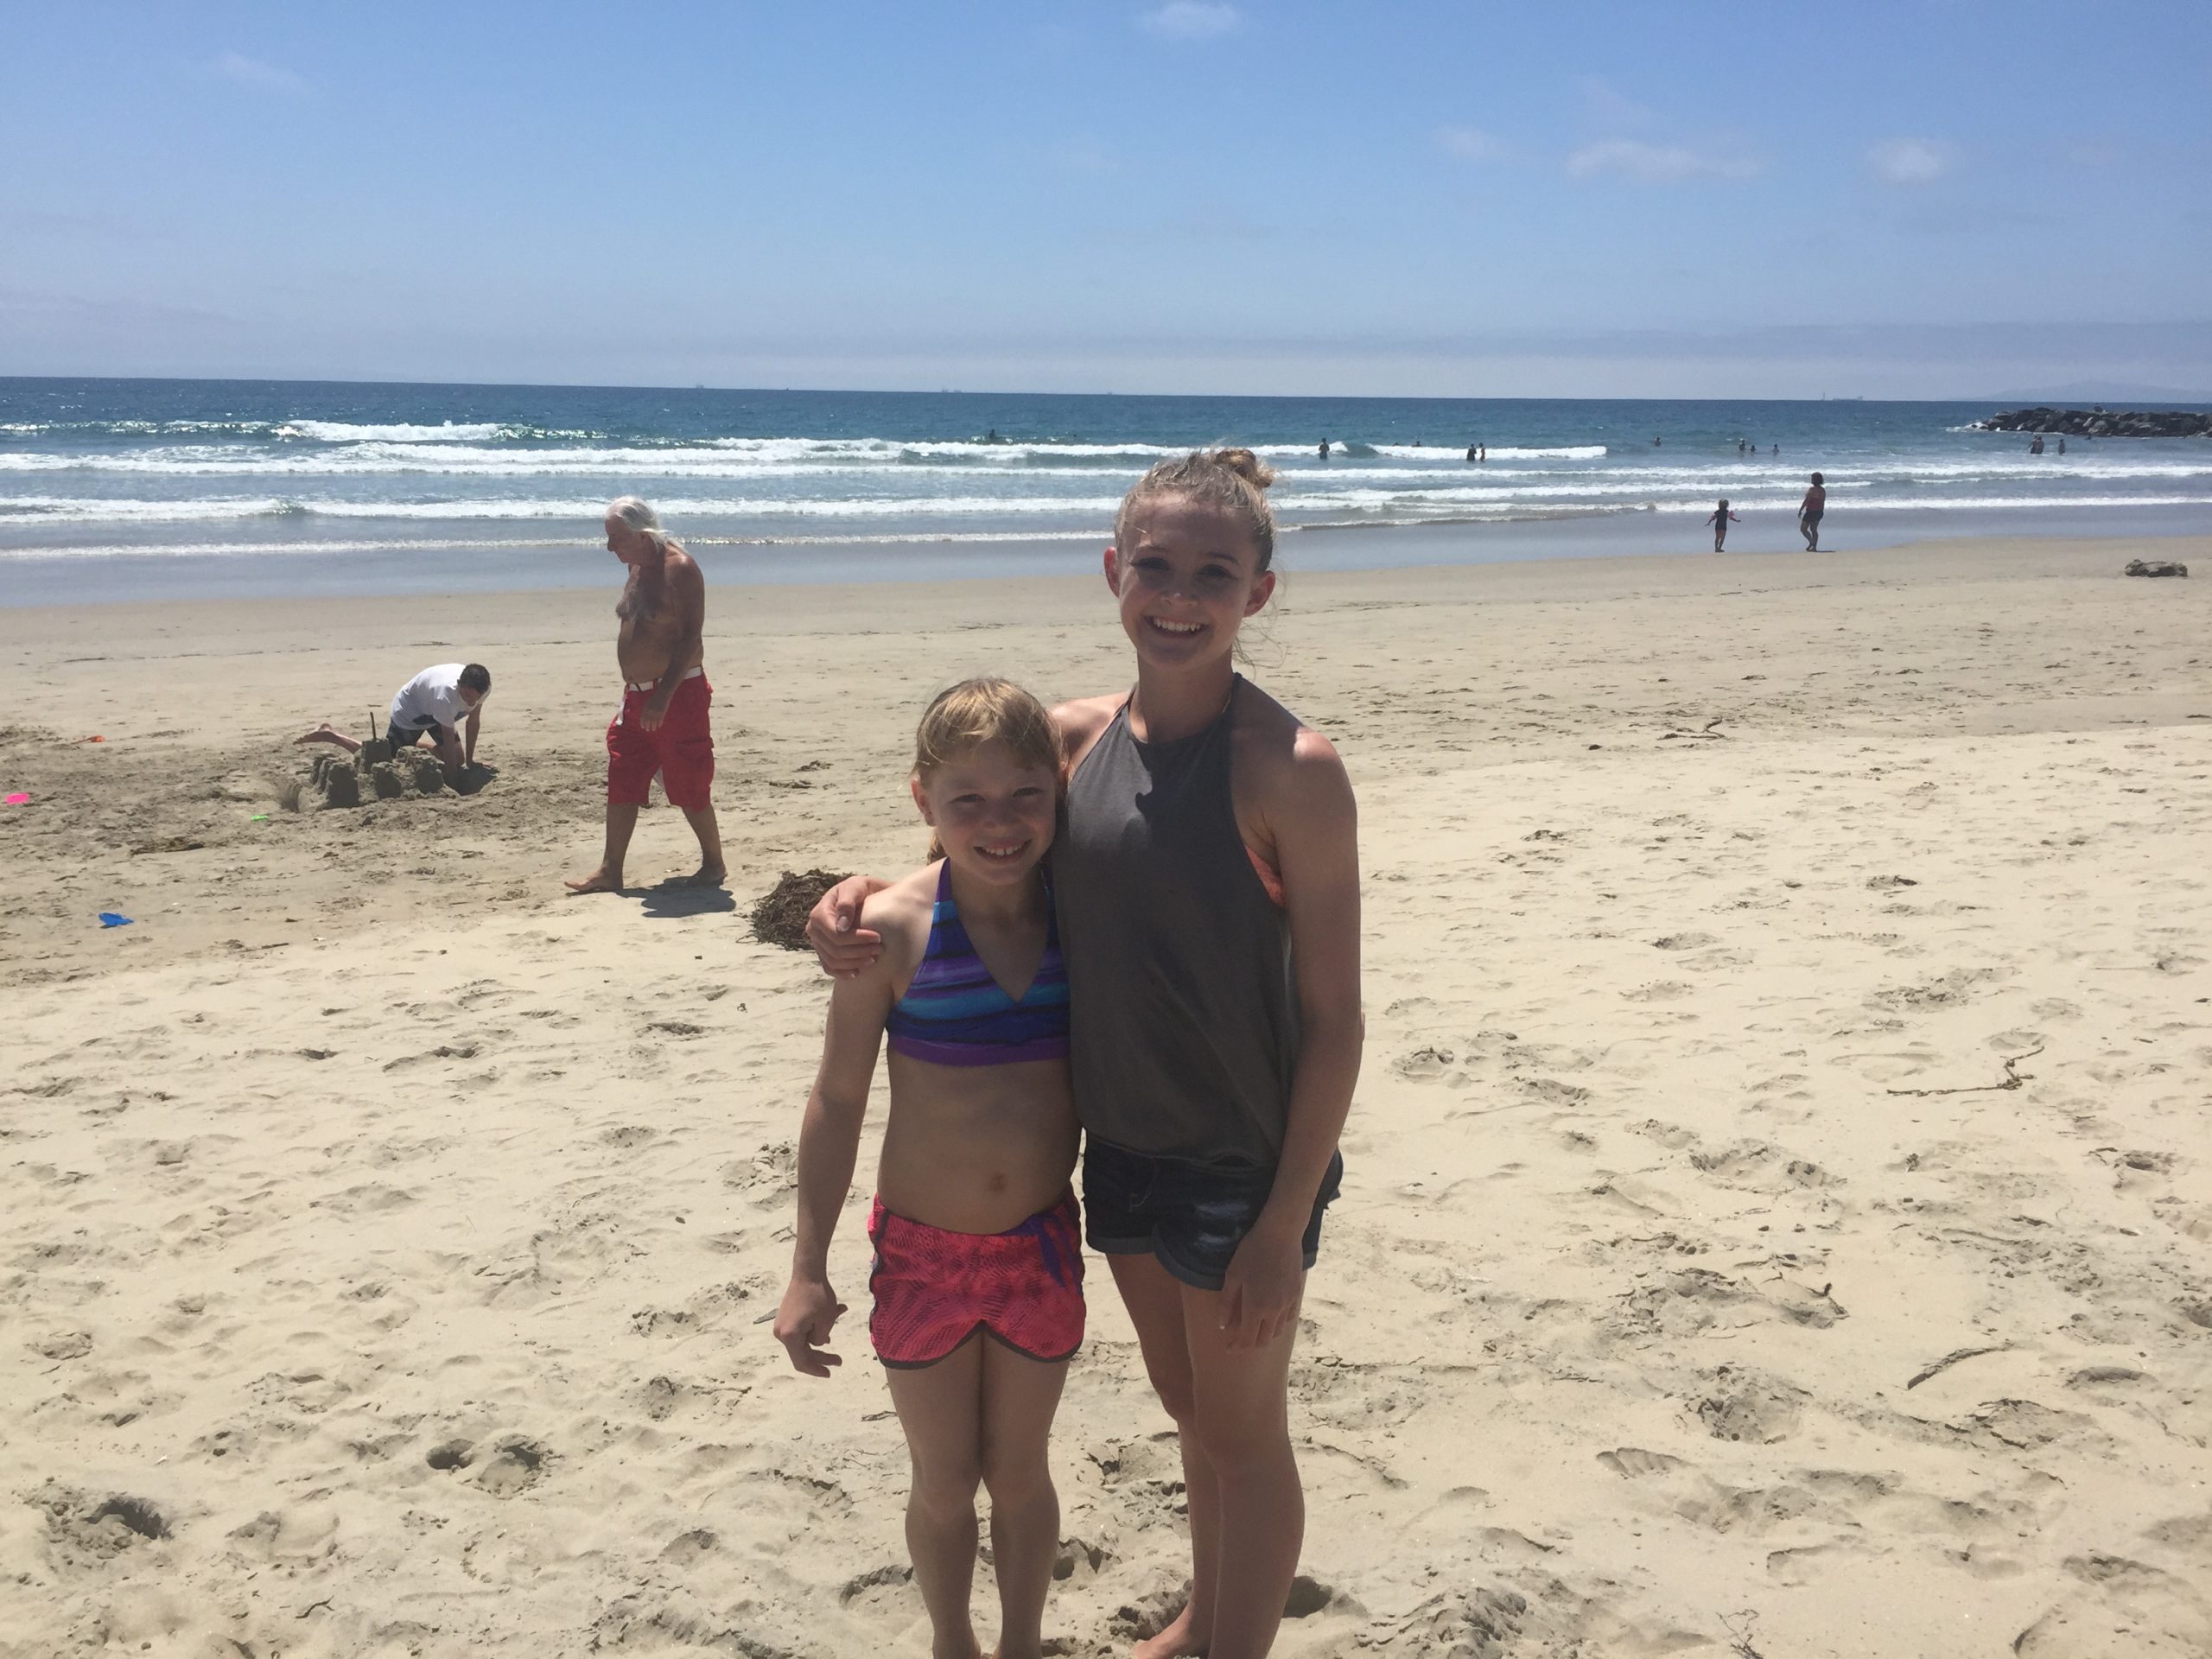 Hannah and Kaylie at the beach